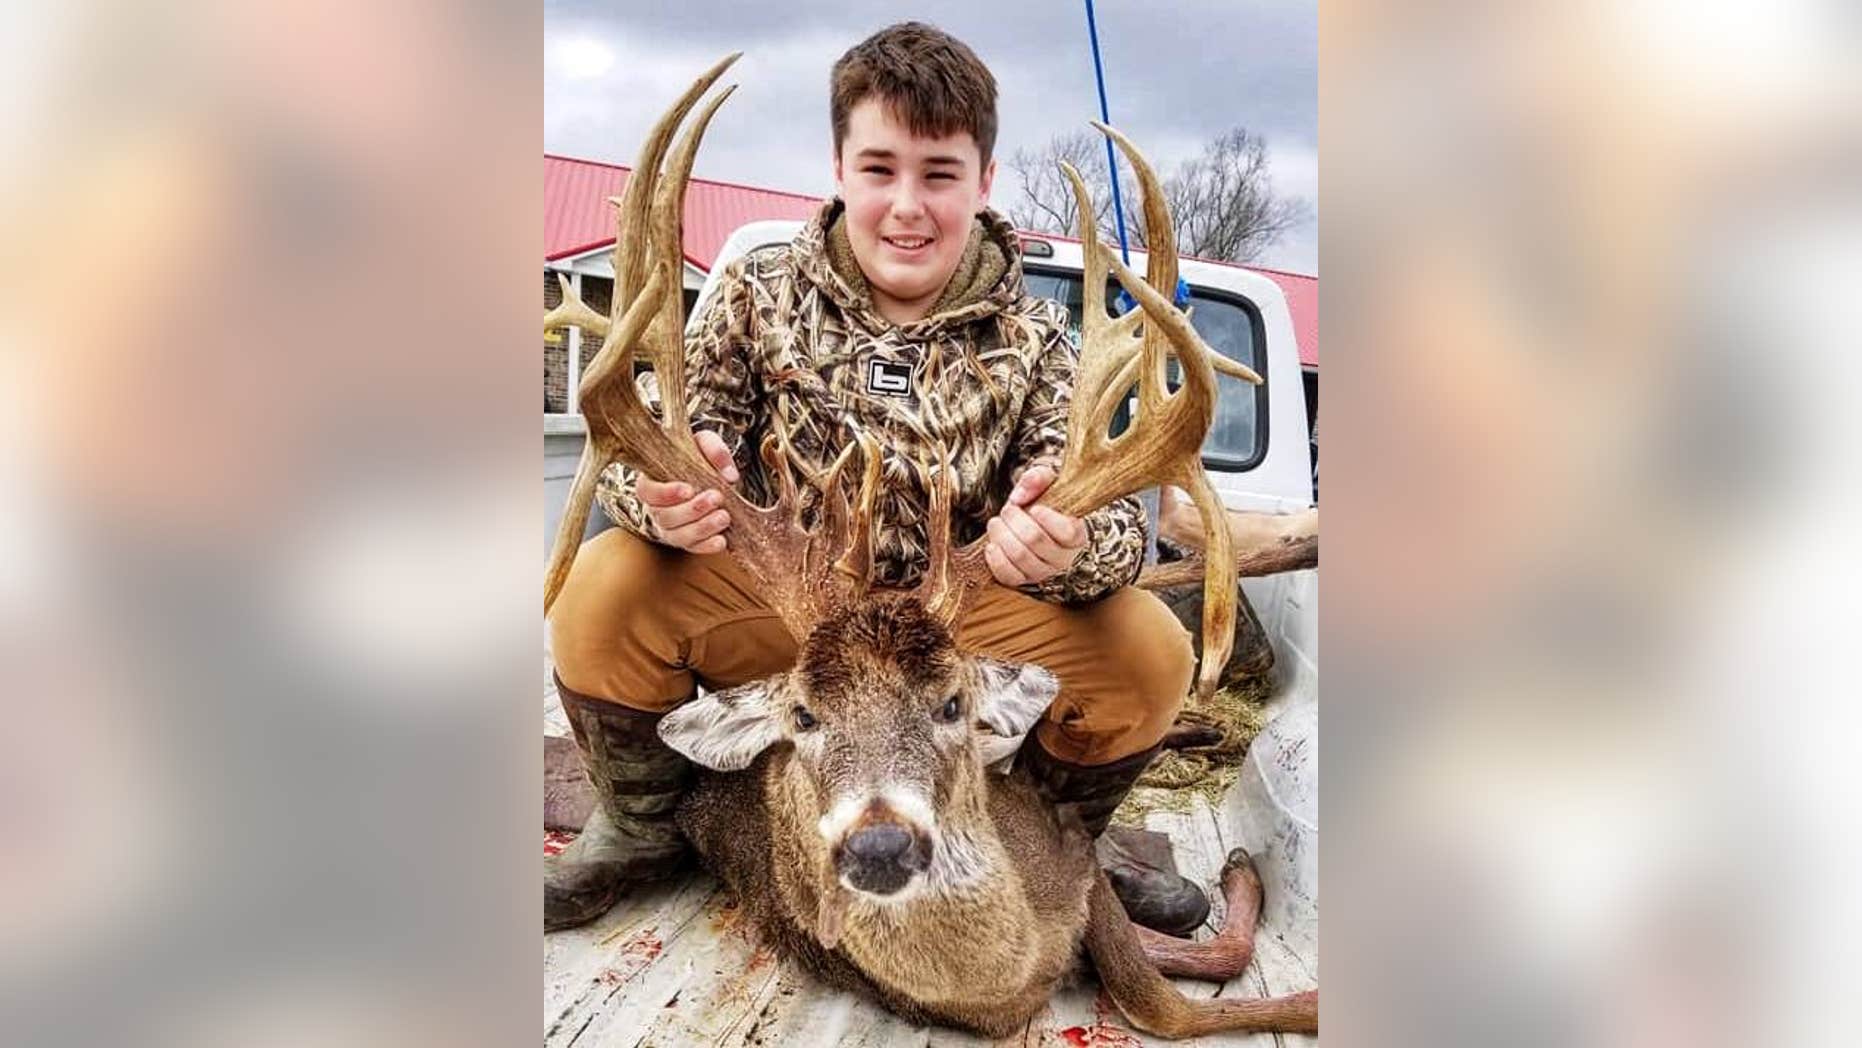 Tennessee teen bags 27-point ‘monster’ buck following ‘crazy’ hunt